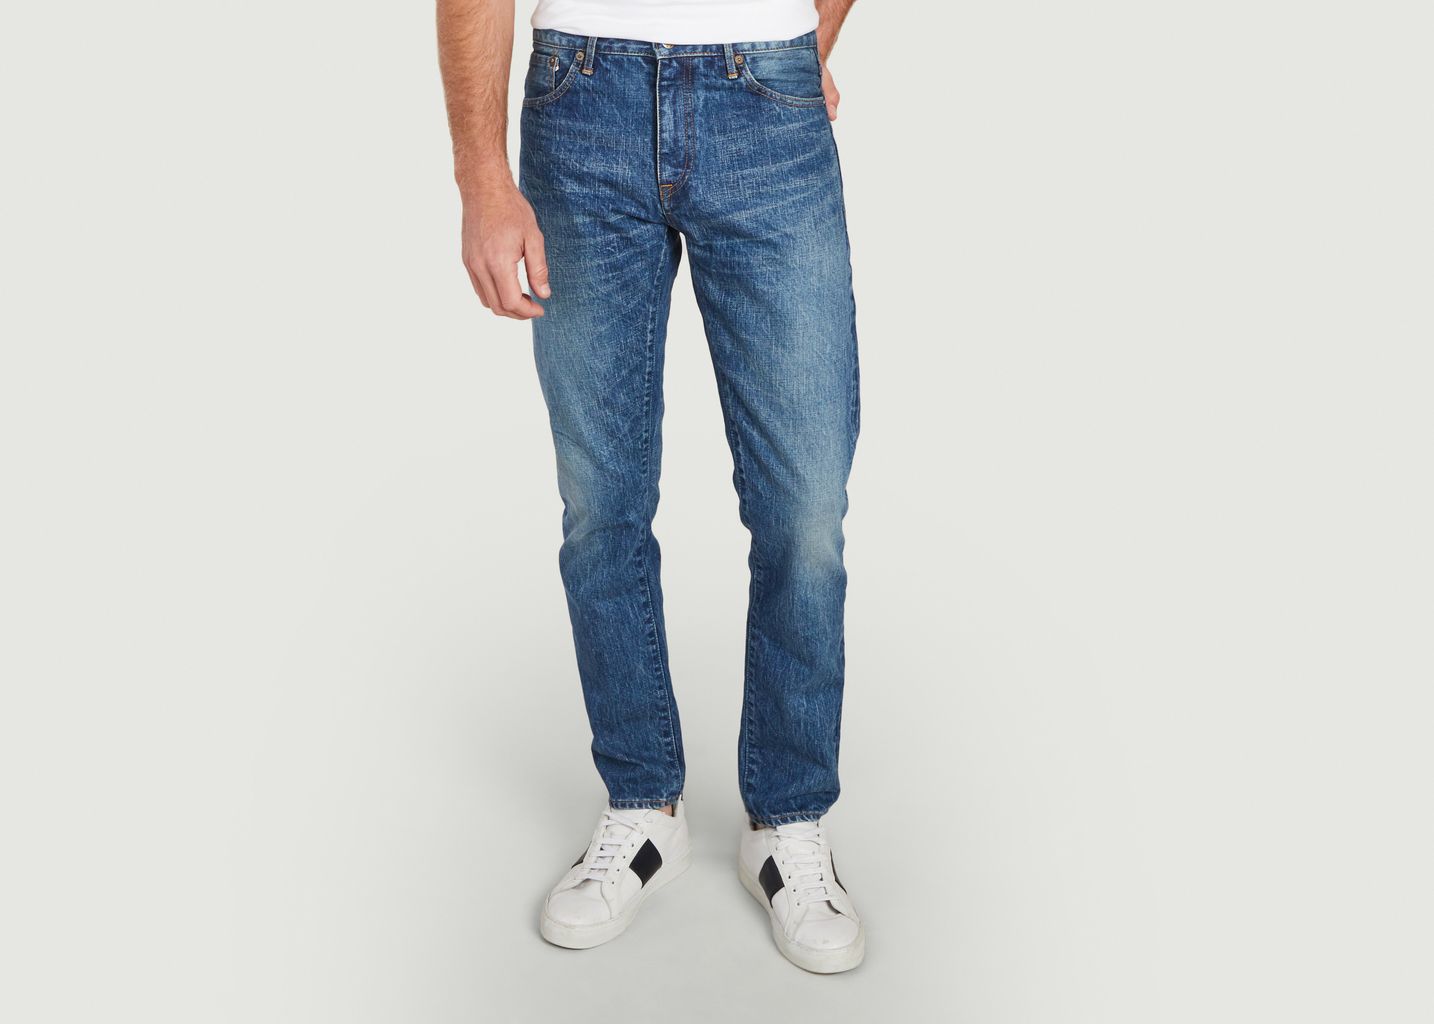 Circle straight cut jeans - Japan Blue Jeans